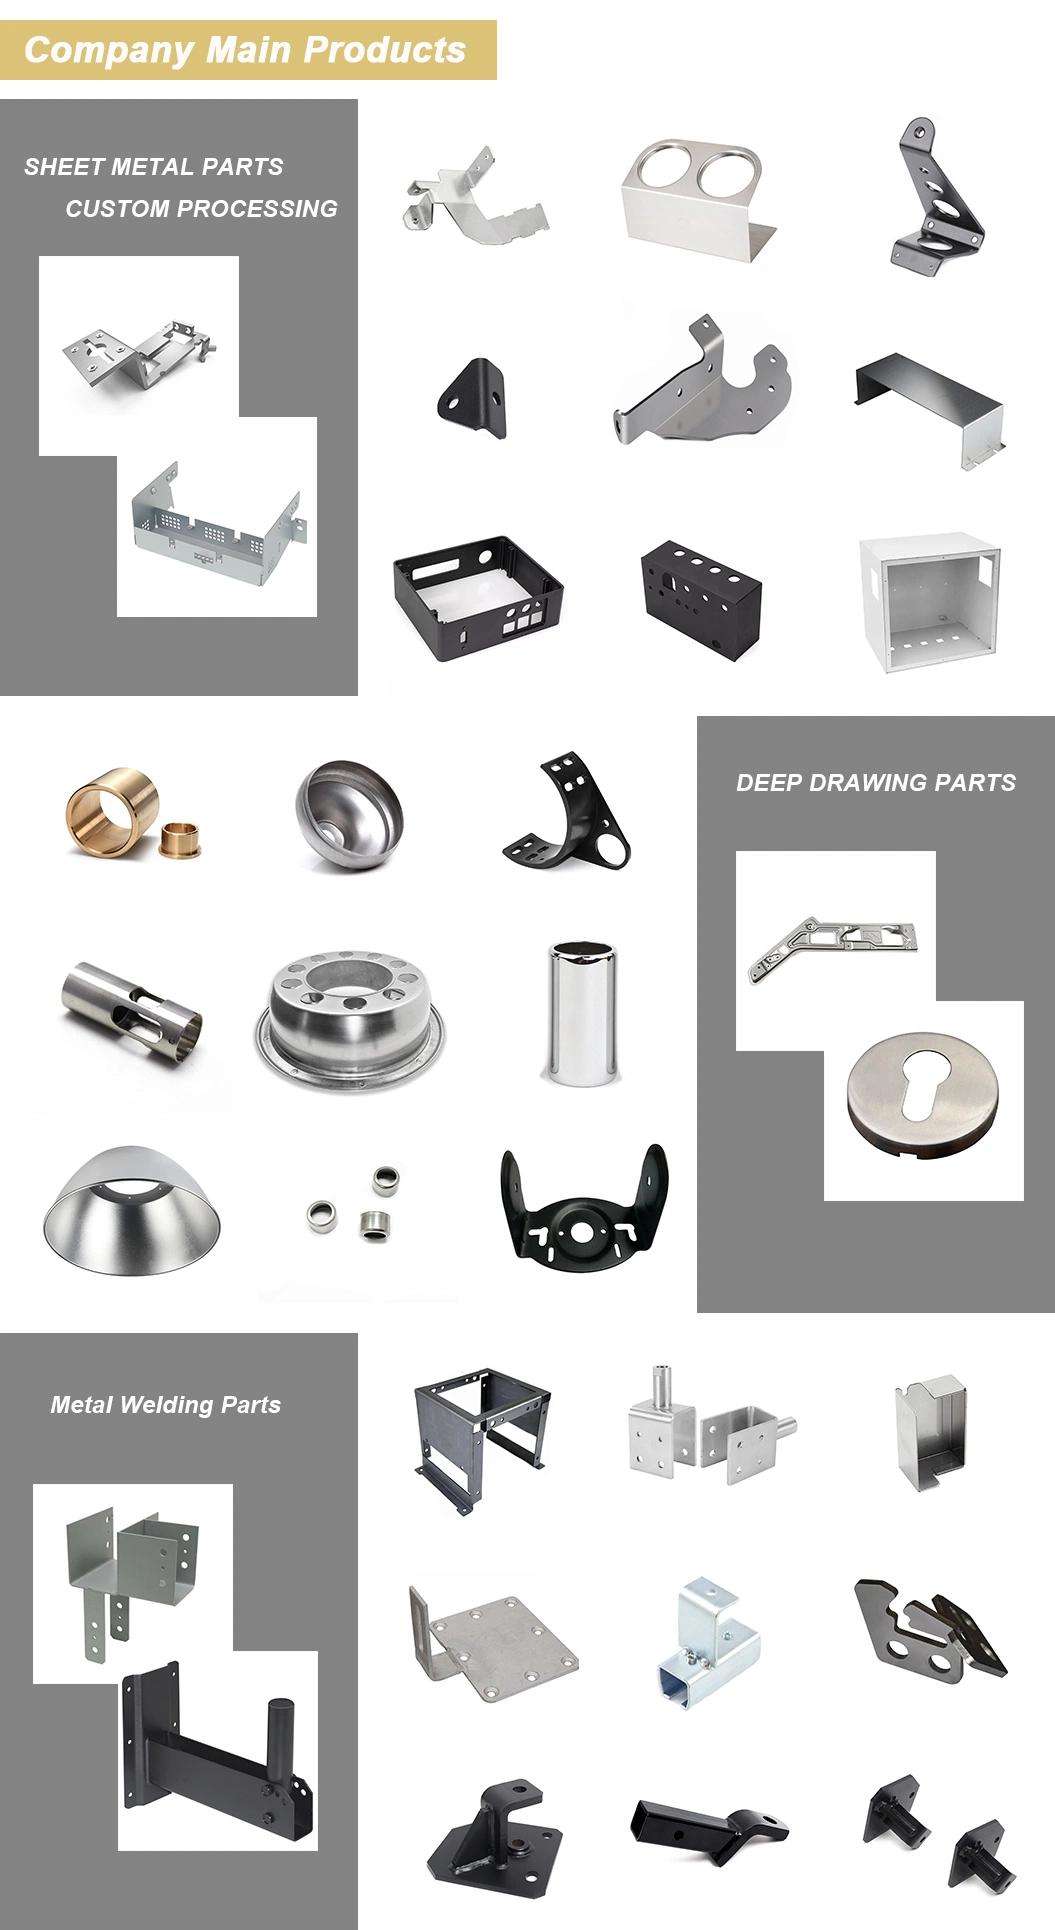 Mechanical Hardware Stretch Parts to Produce Metal Sheet Metal Parts Laser Cutting Stamping